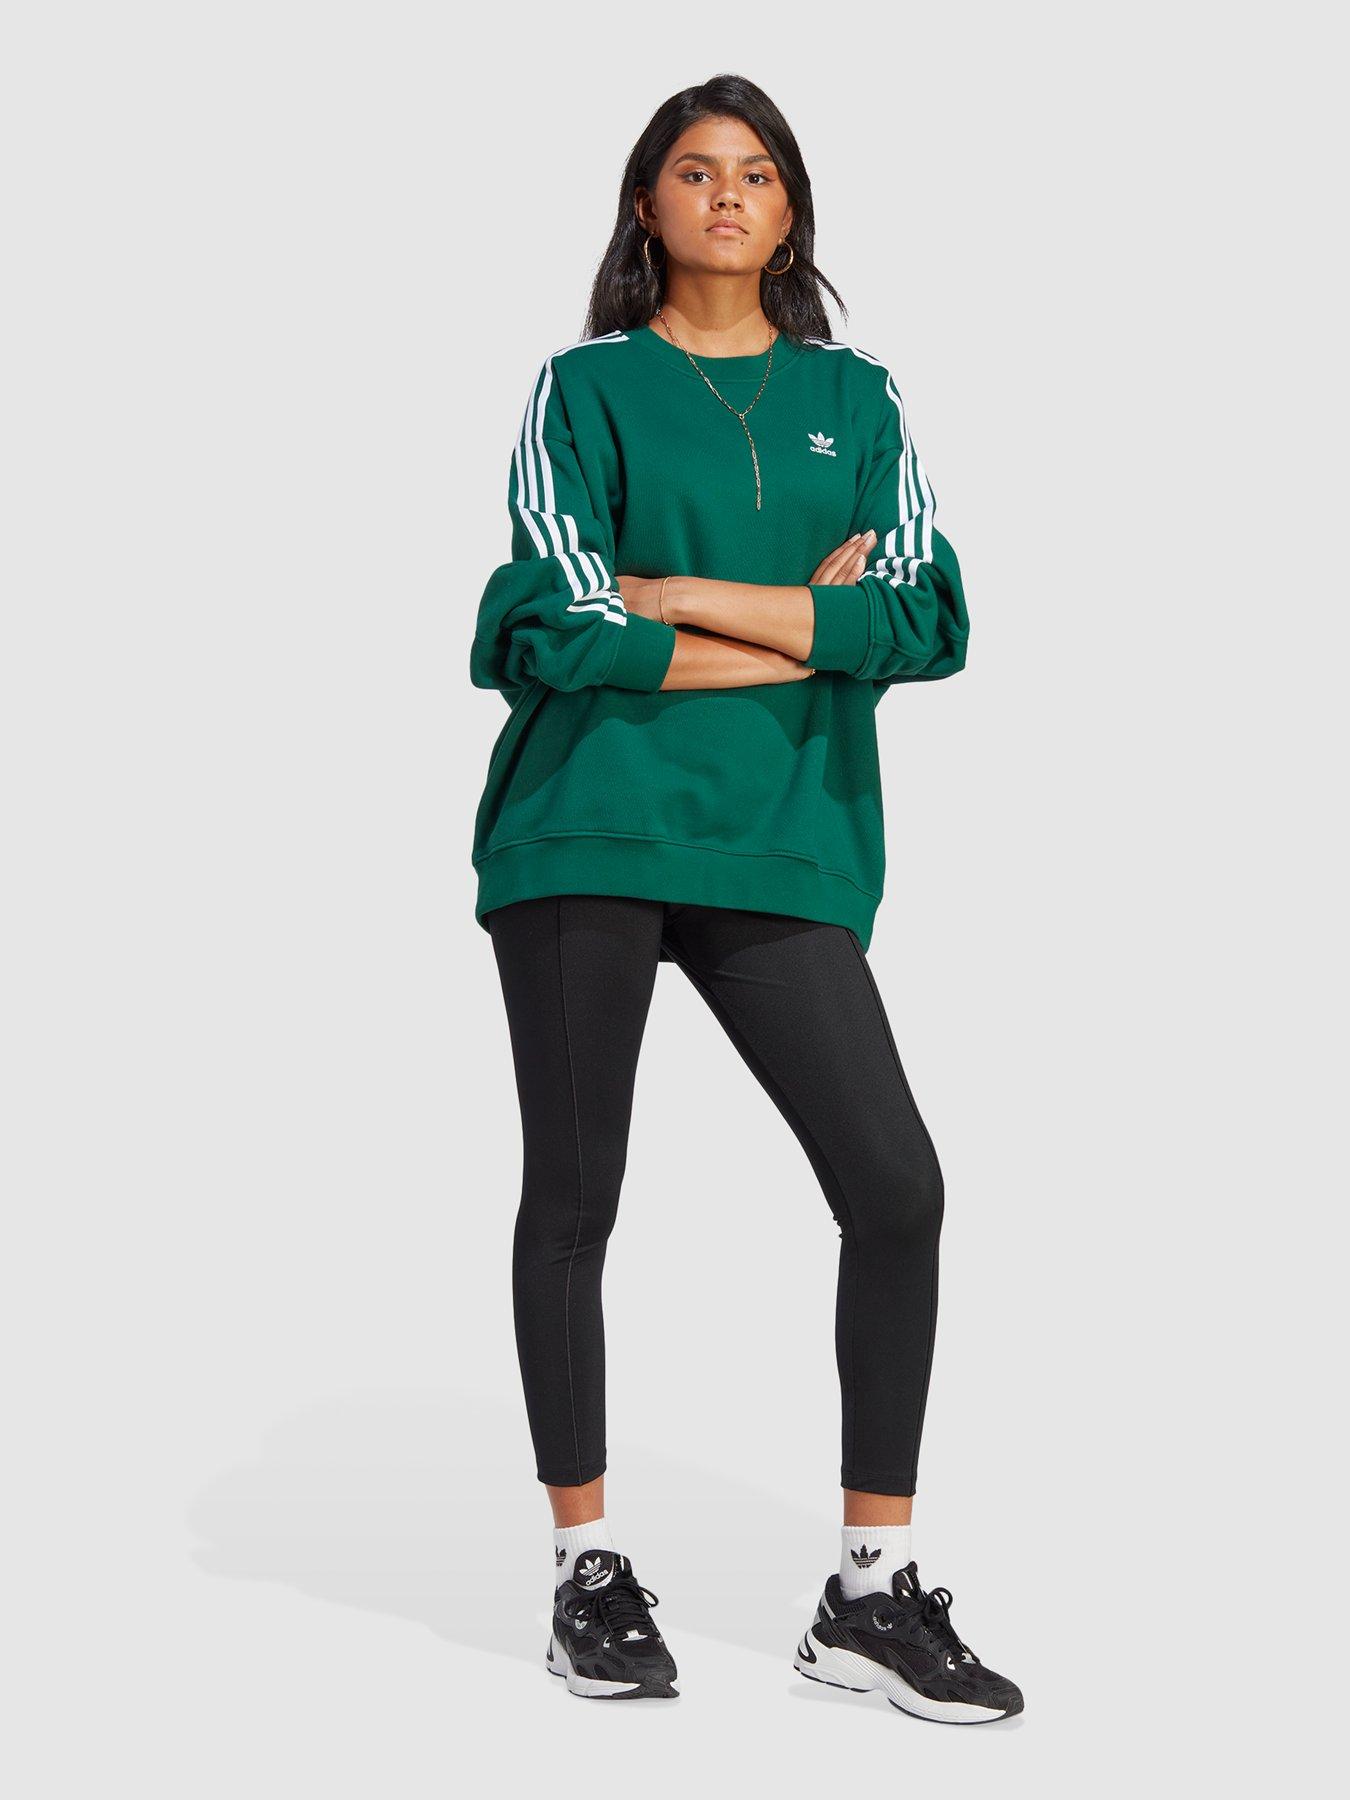 adidas Originals Women's Loungewear Trefoil Tights, Orbit Green